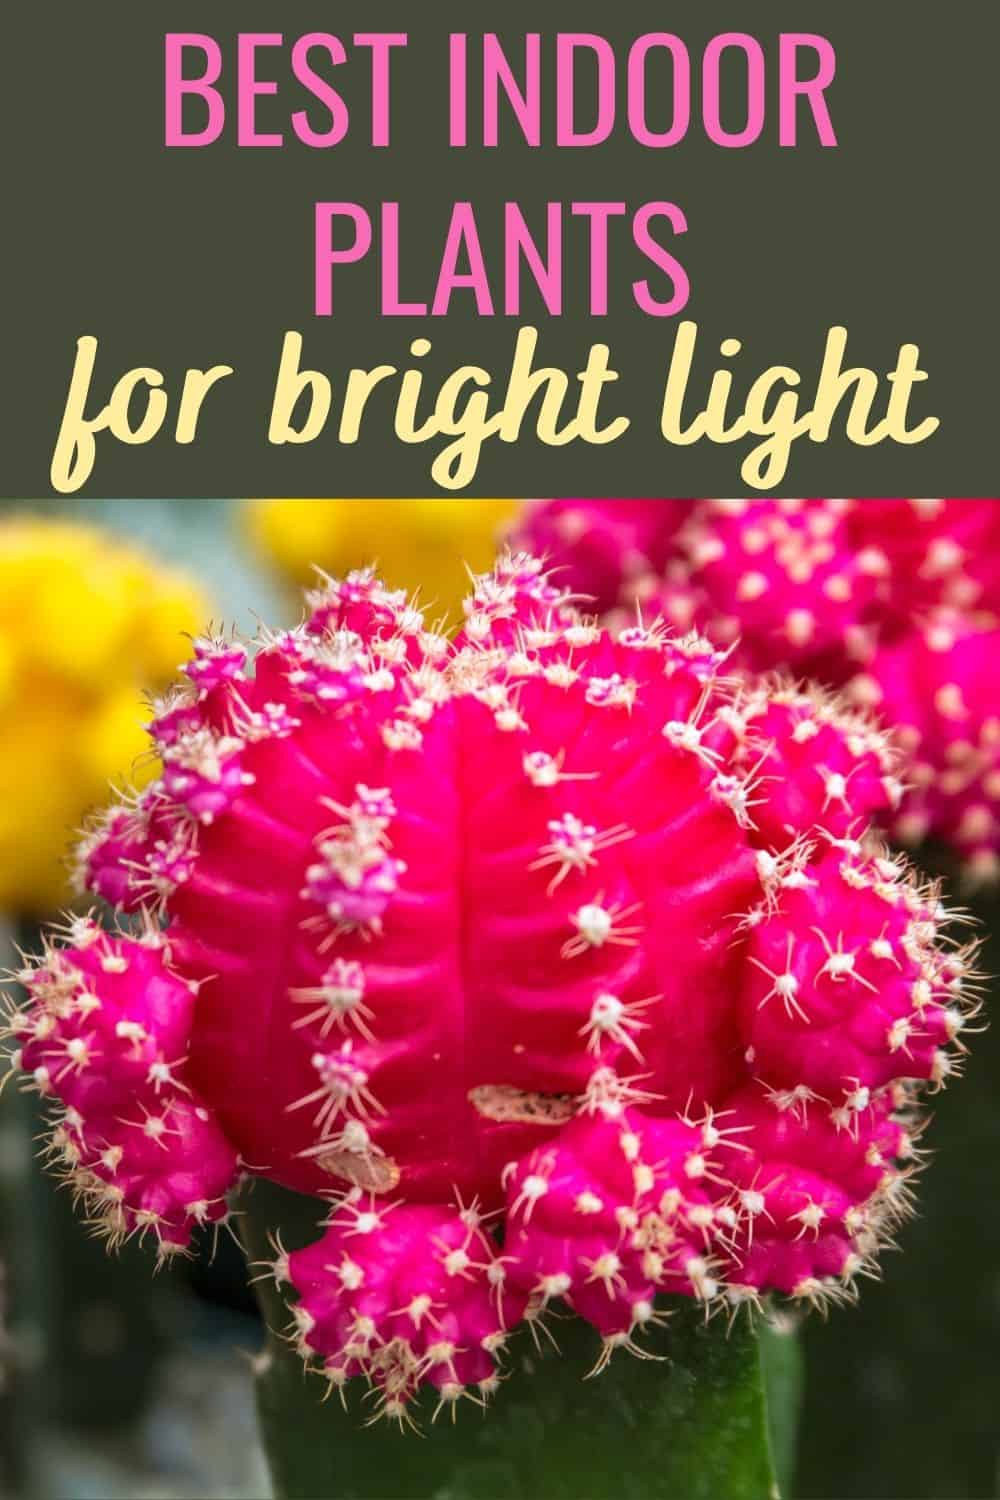 Best indoor plants for bright light